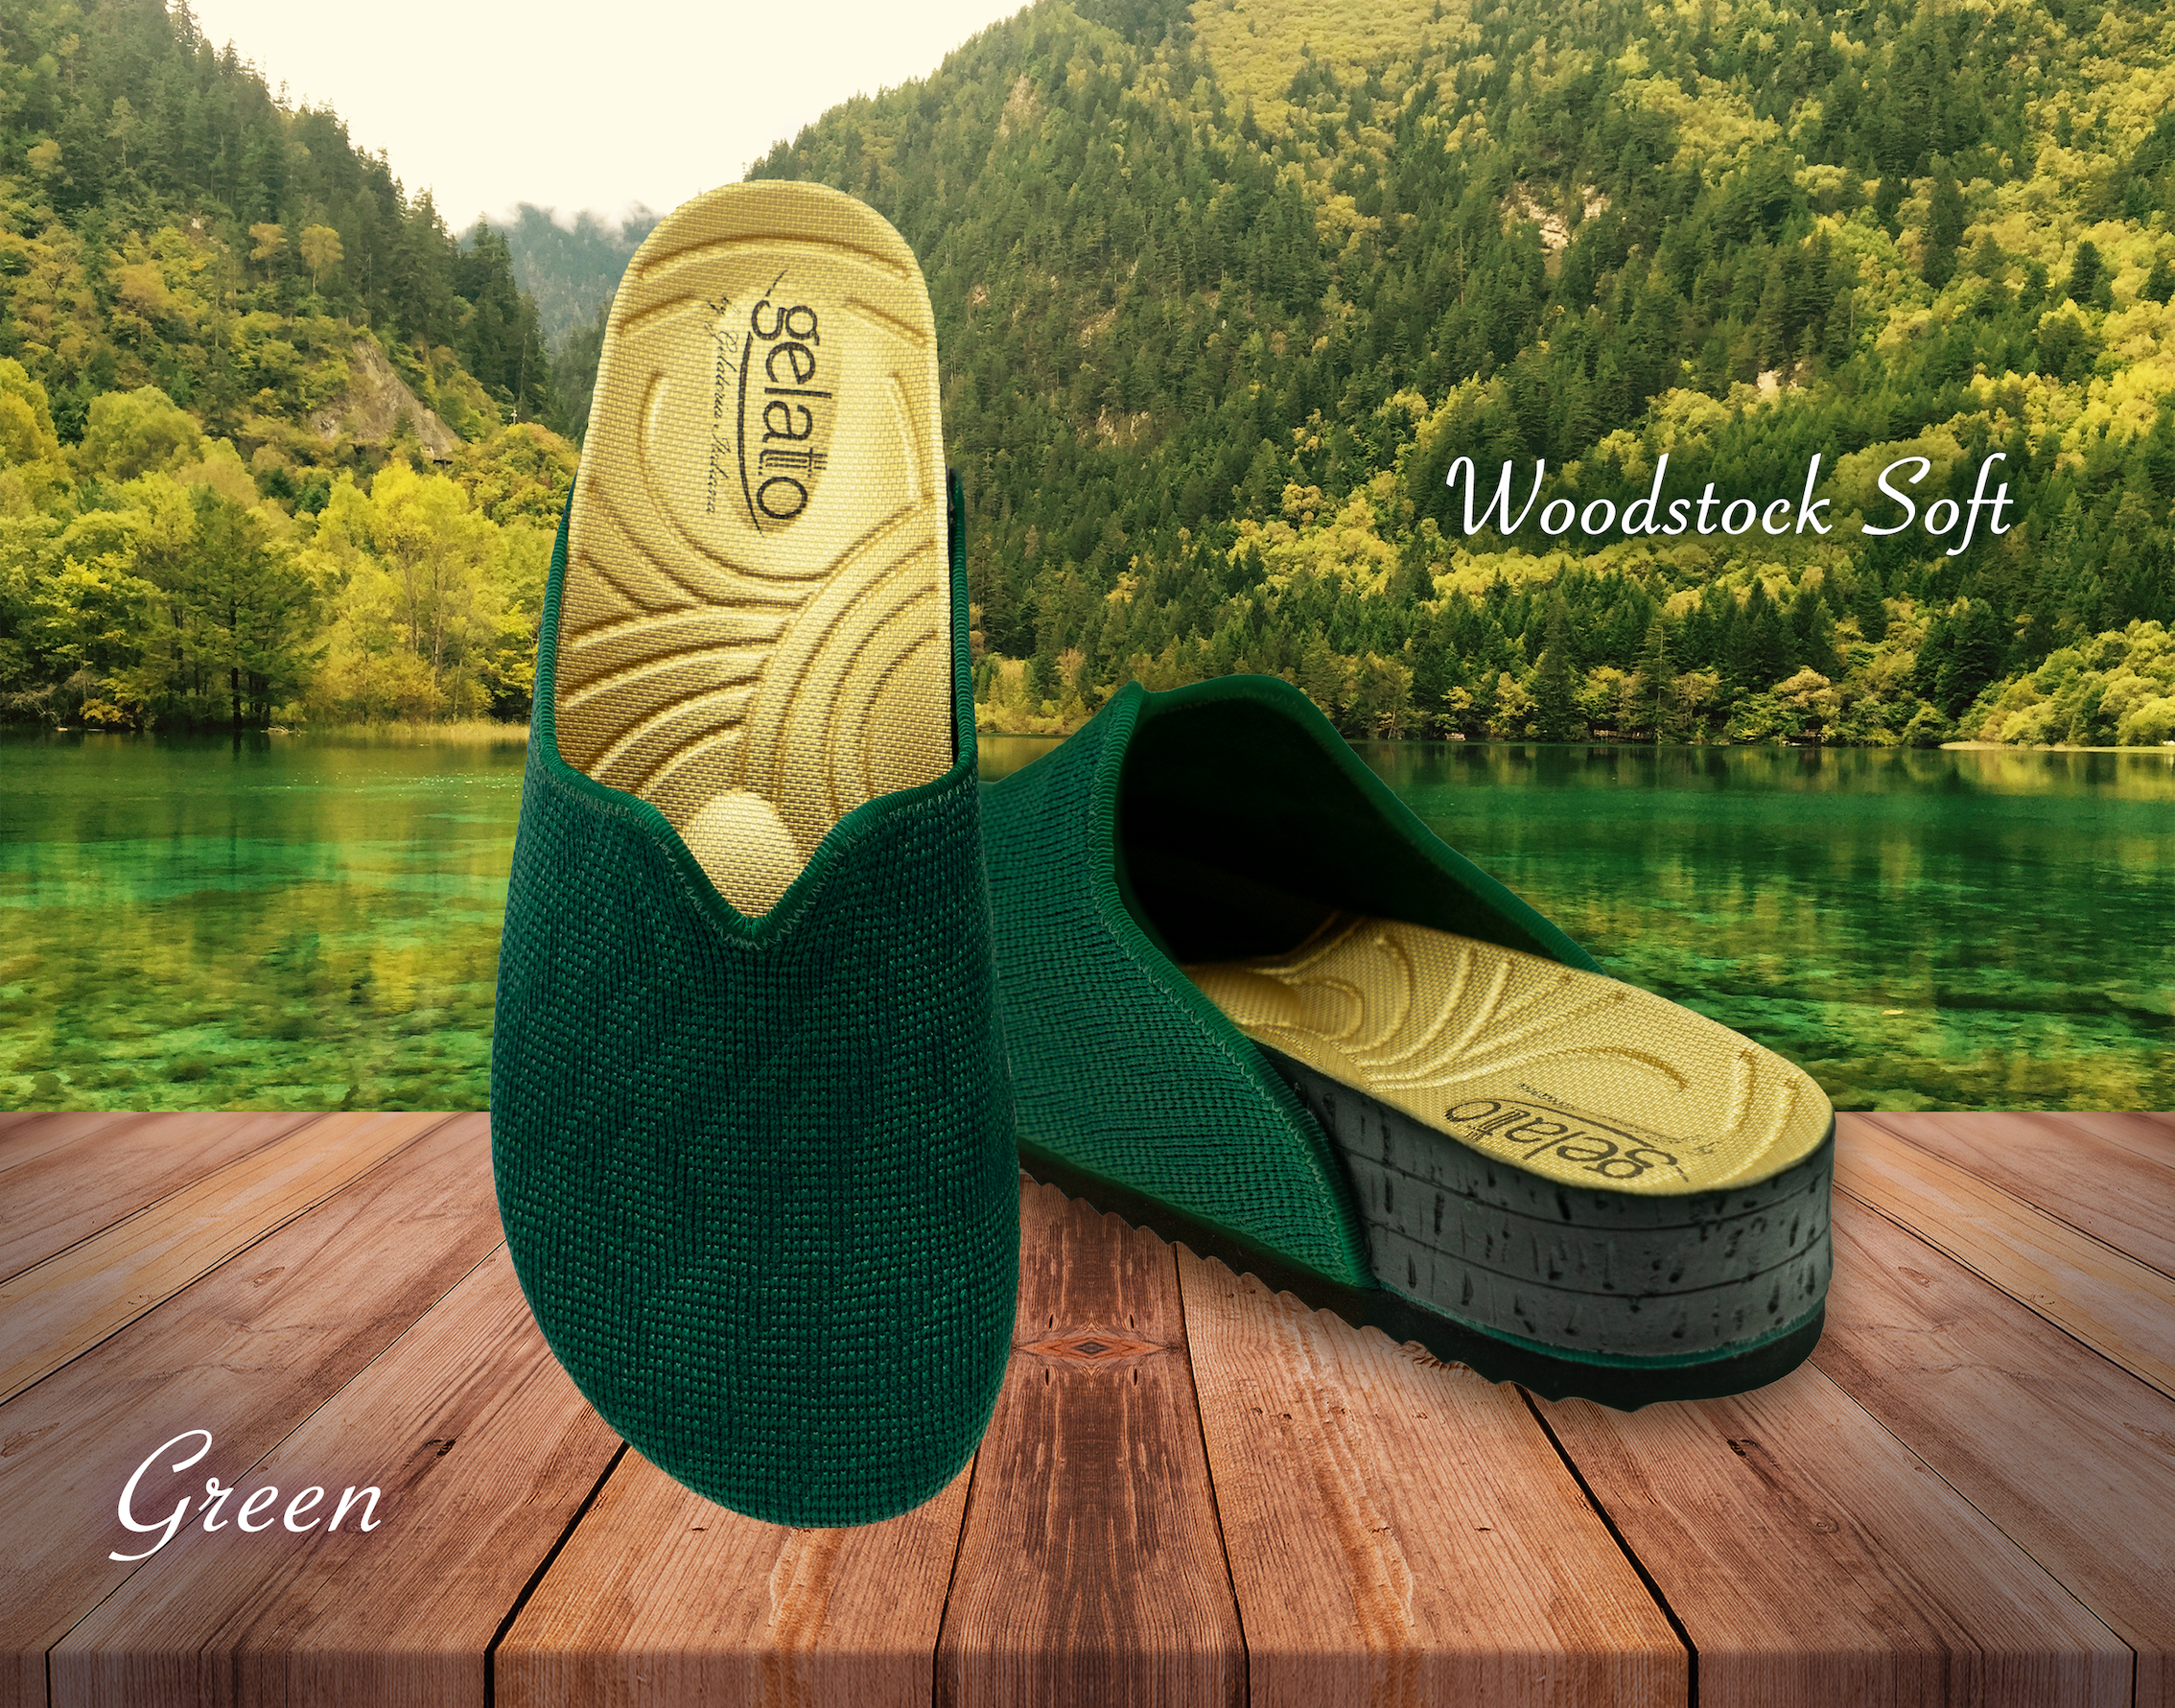 Woodstock Soft 墨綠 Green